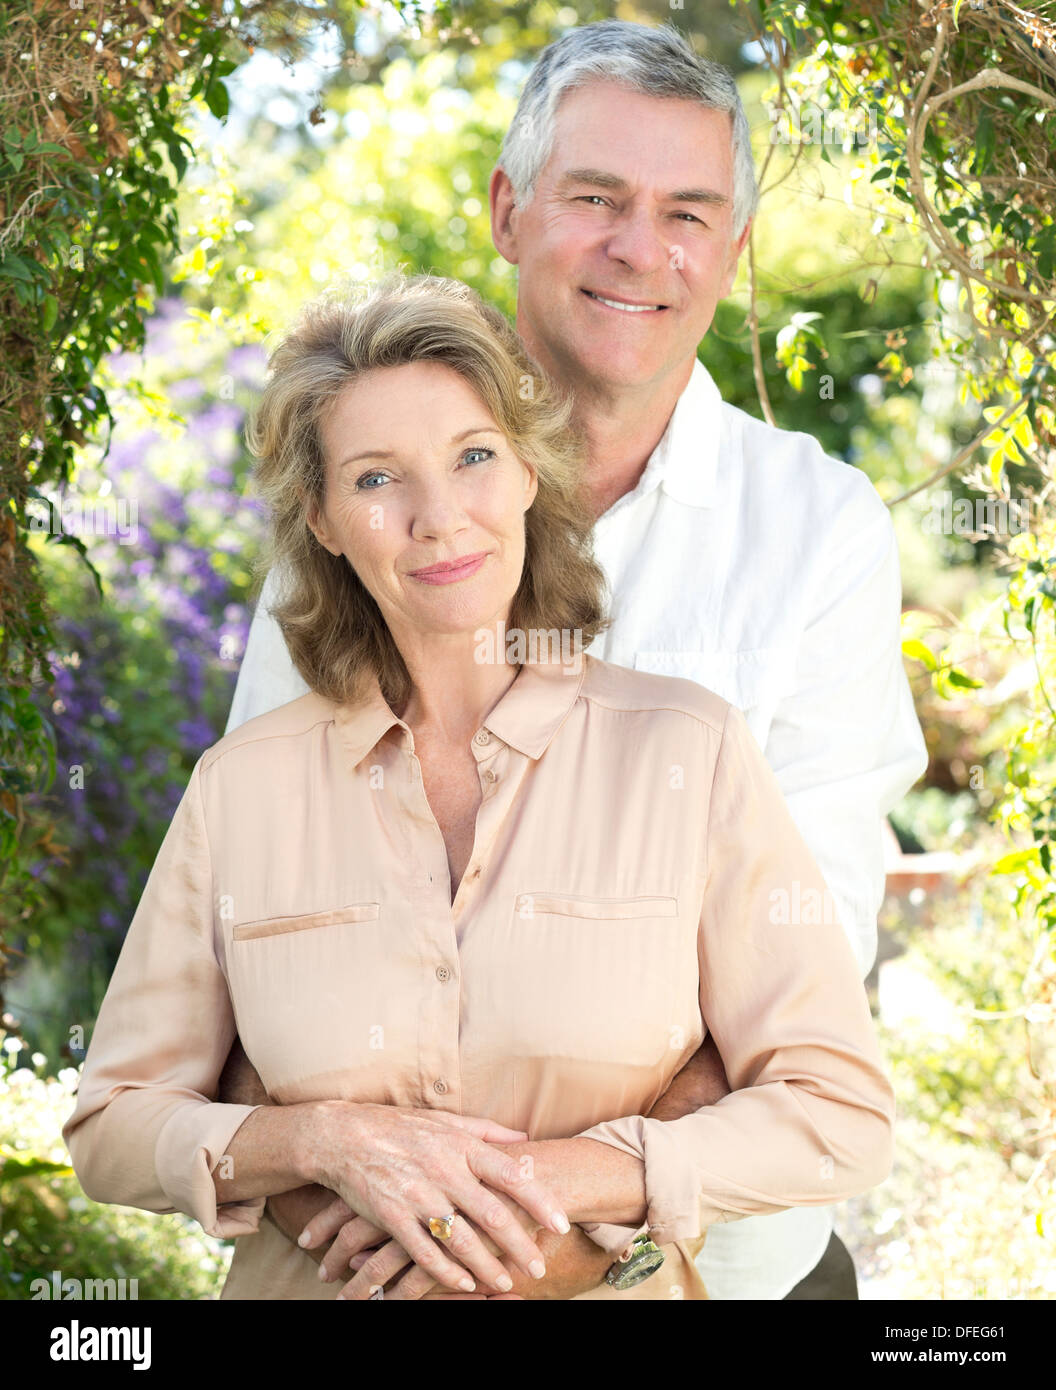 Portrait of smiling senior couple hugging outdoors Stock Photo